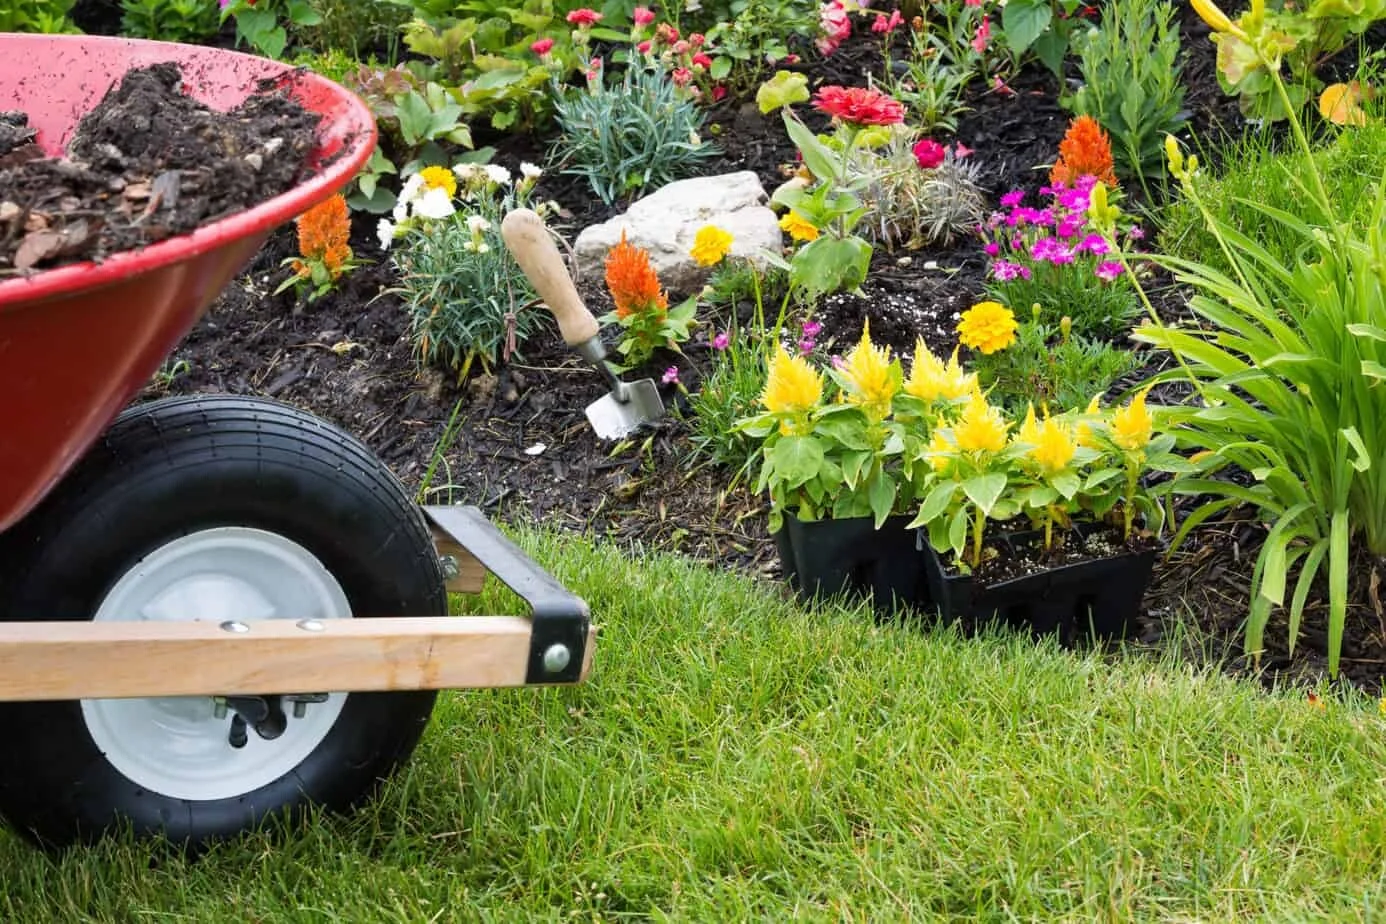 Wheelbarrow alongside a newly planted flowerbed